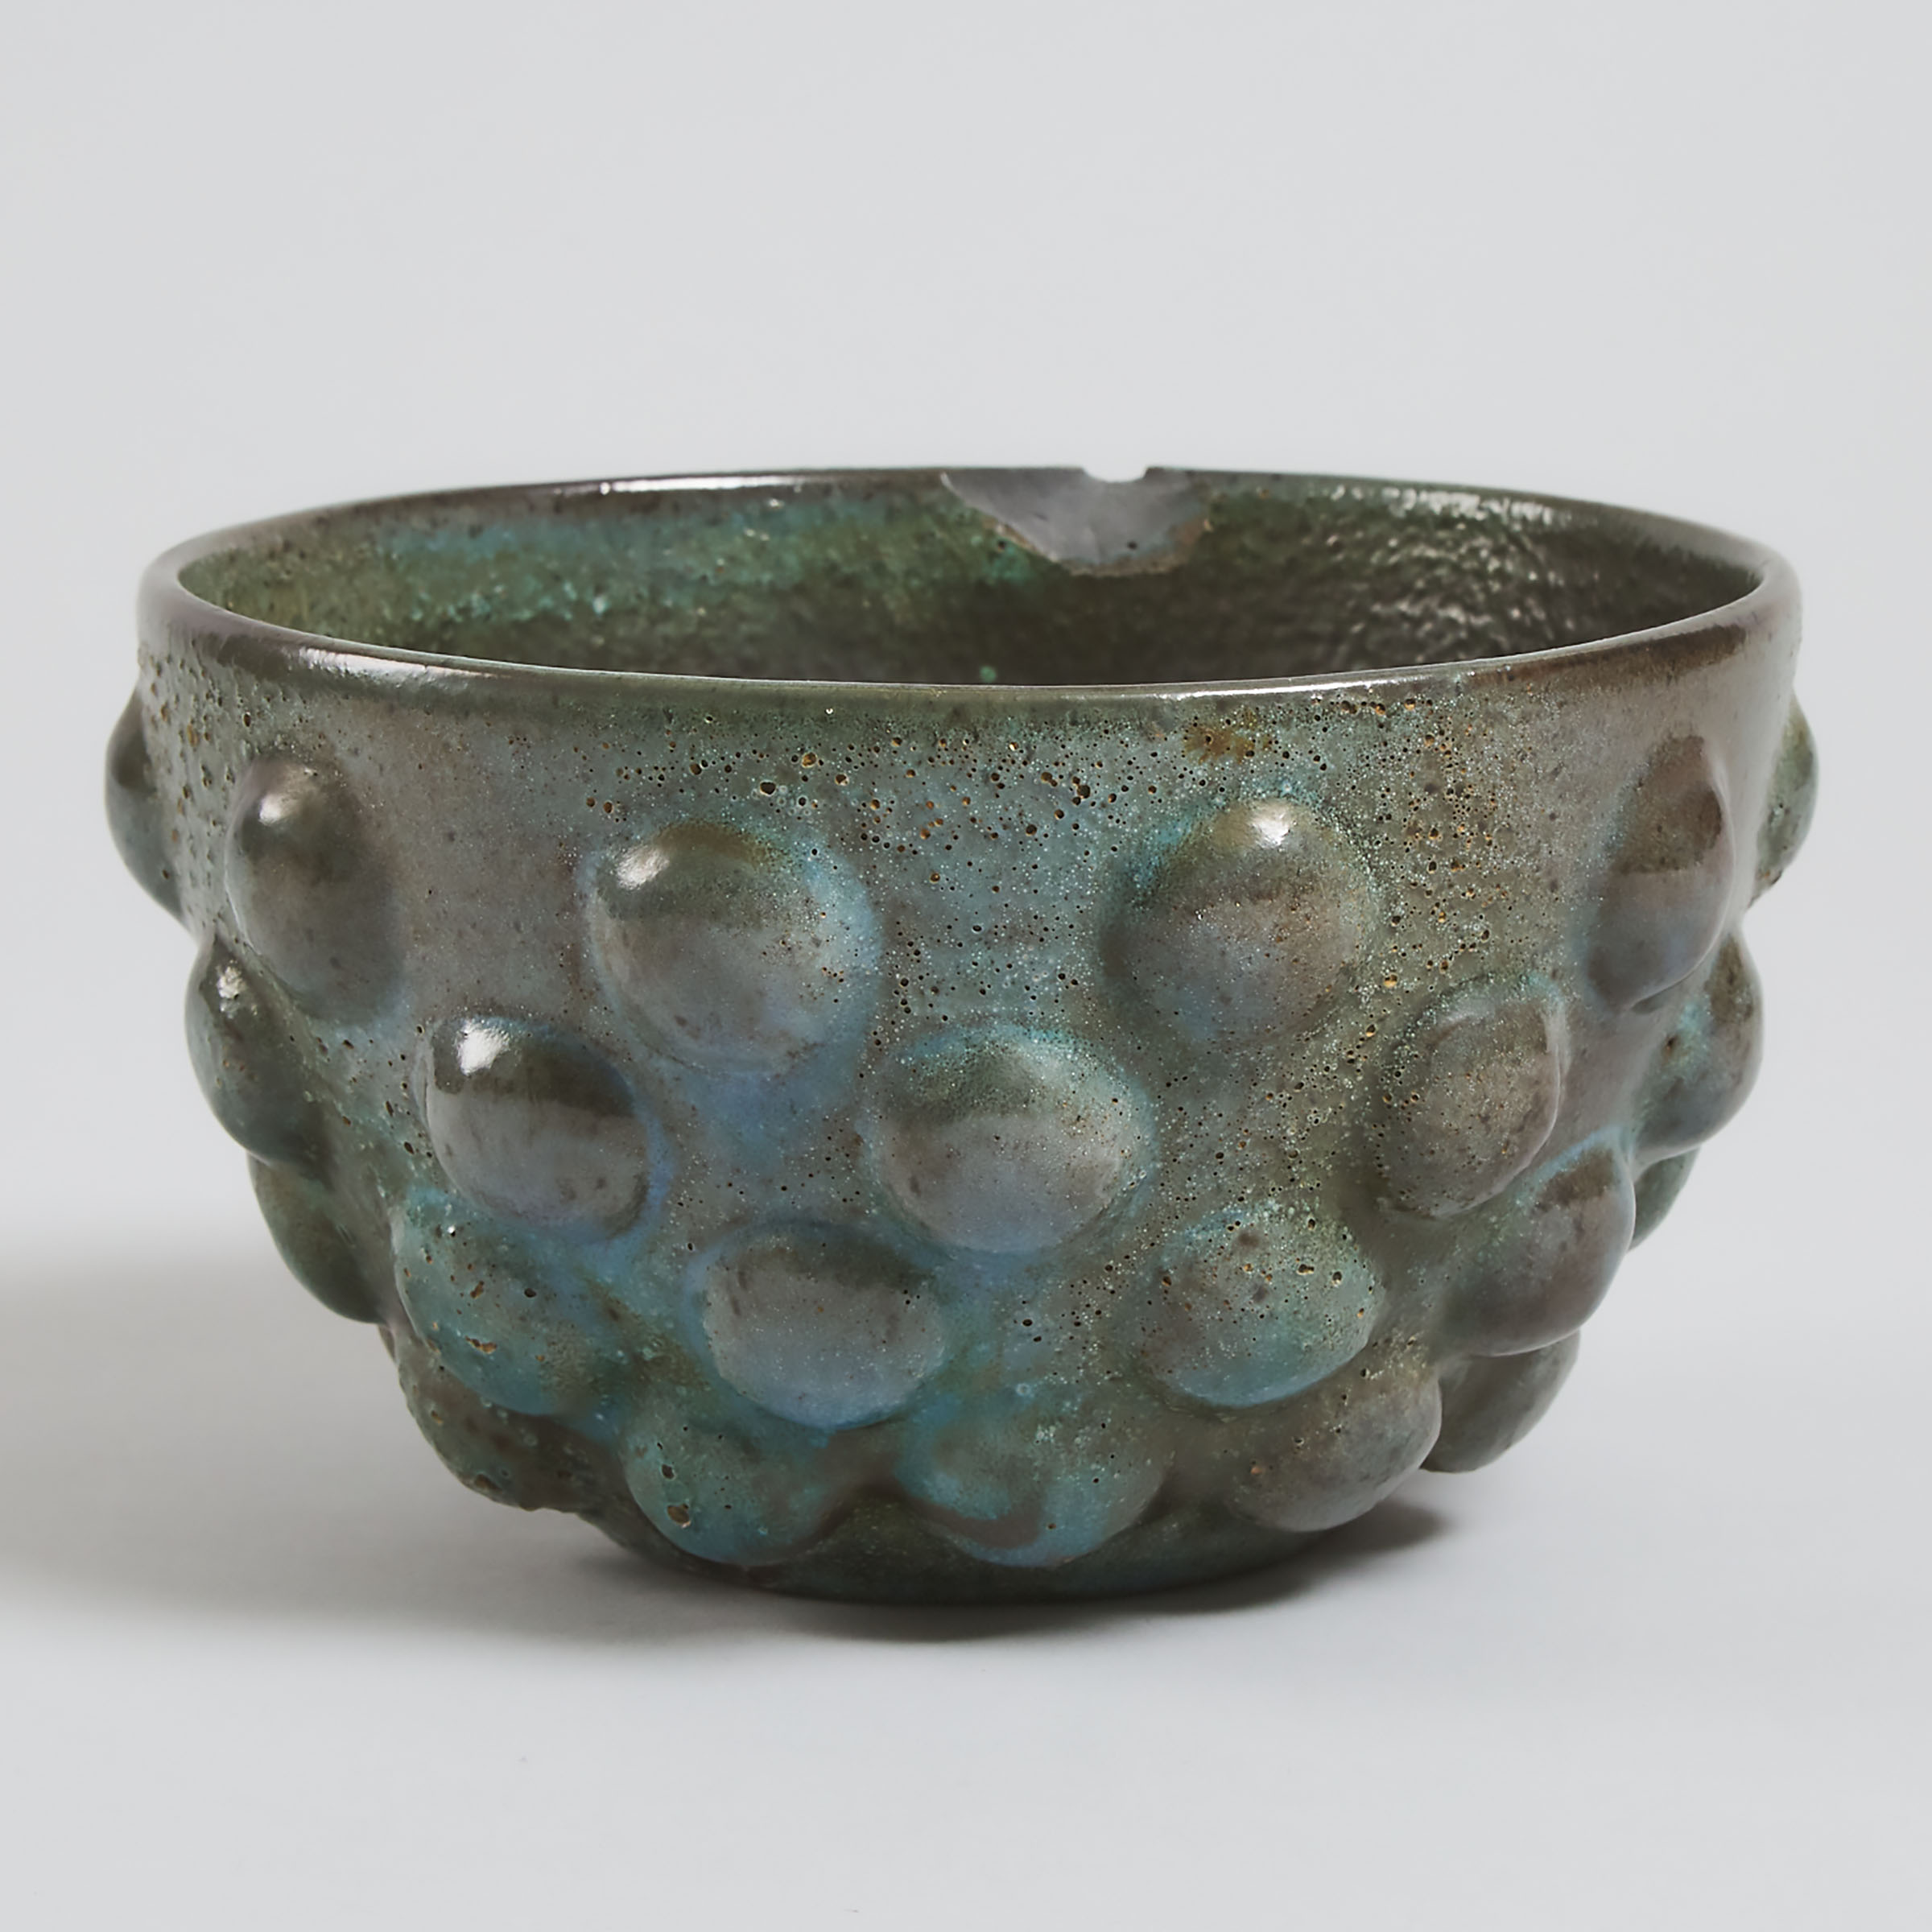 Deichmann Mottled Blue Glazed Stoneware 'Kish' Bowl, mid-20th century